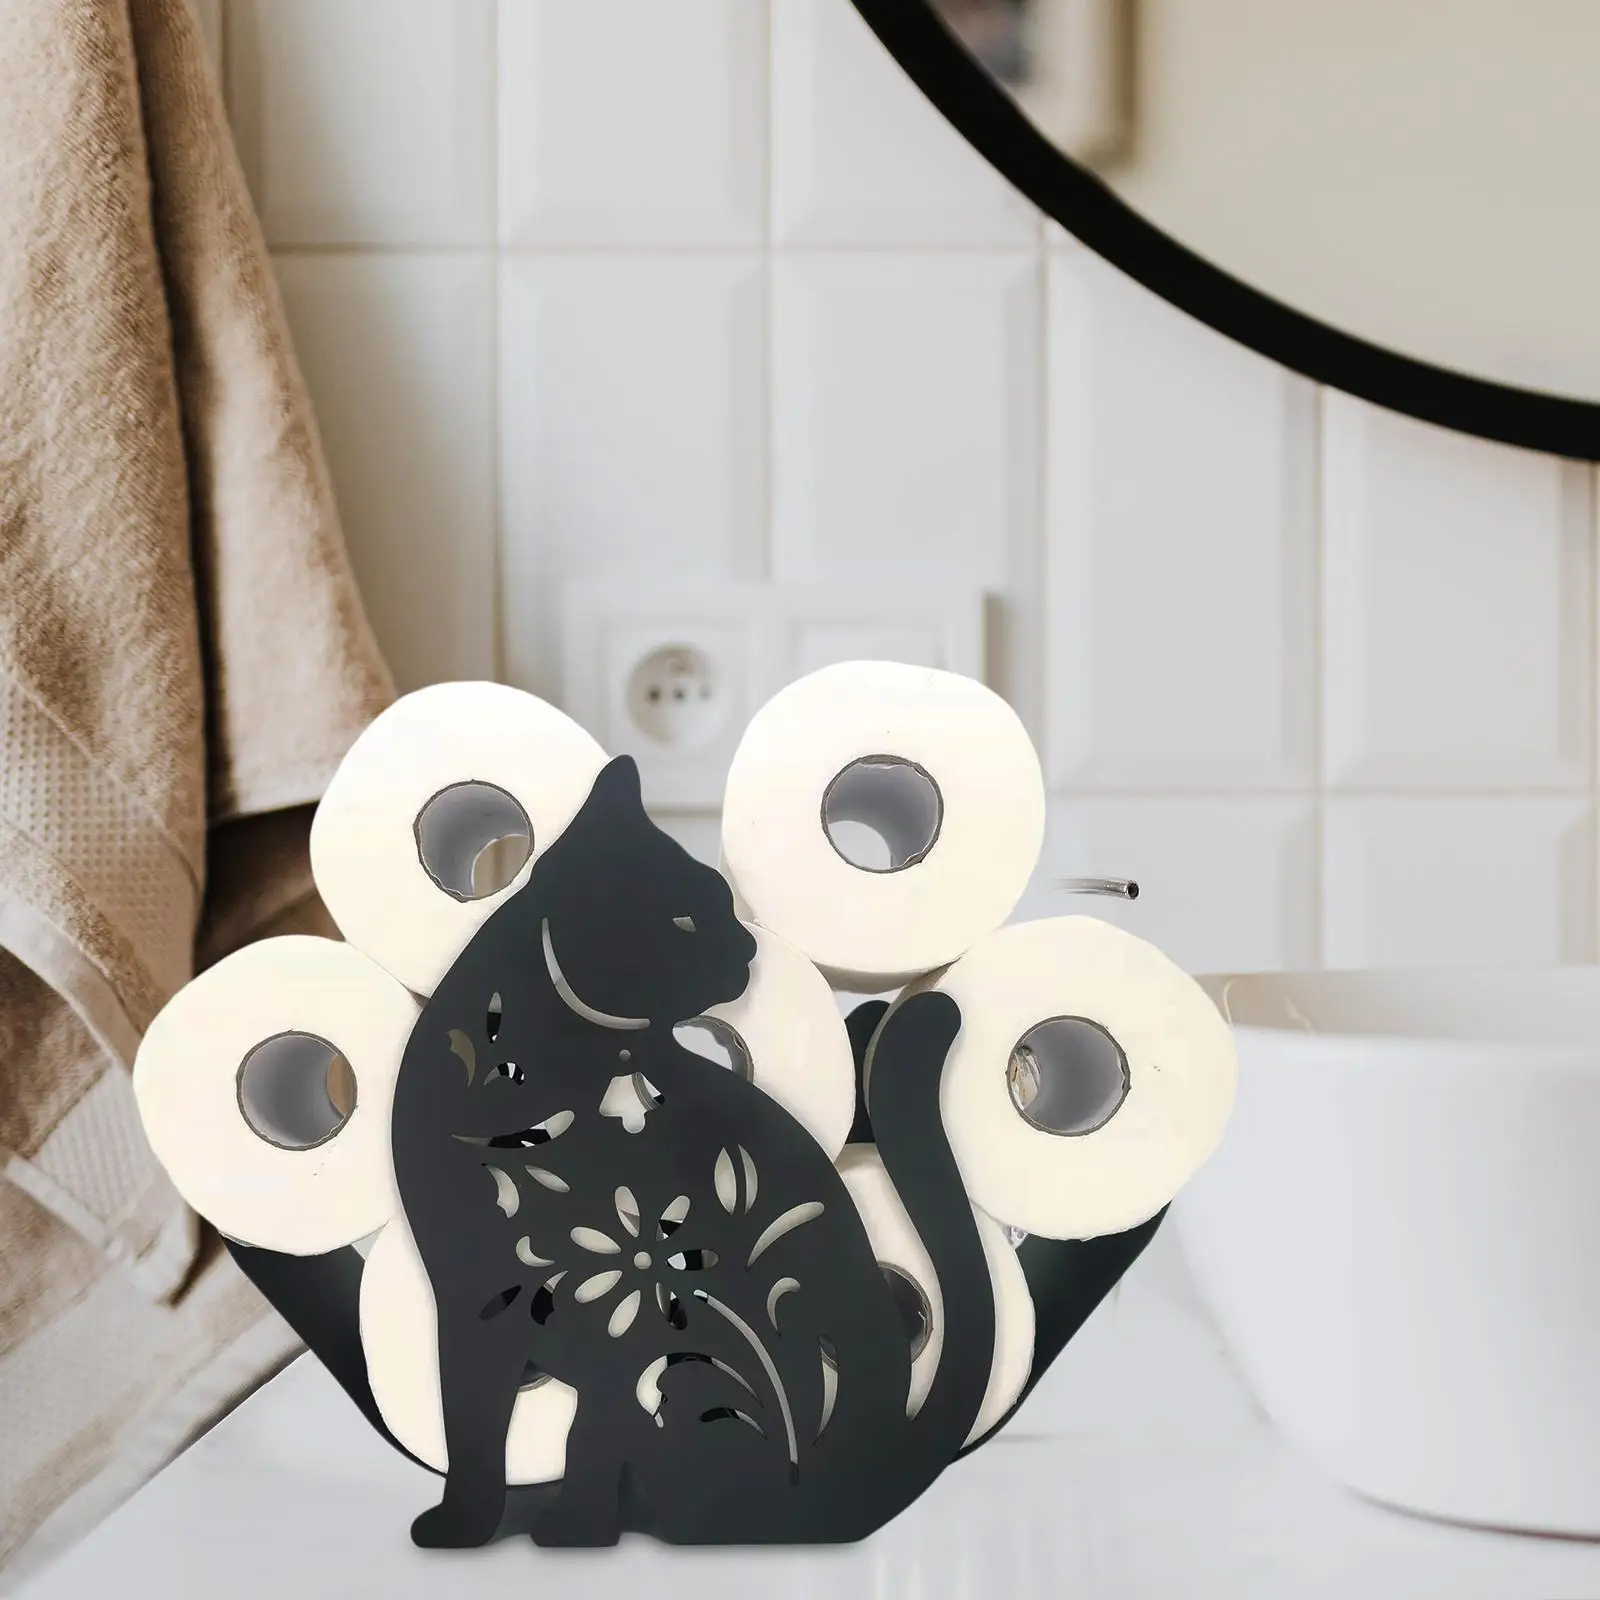 Novelty Creative Toilet Paper Holder Hollow Out Bathroom Tissue Storage Iron Tissue Stand for Home Bathroom Kitchen Decor Art